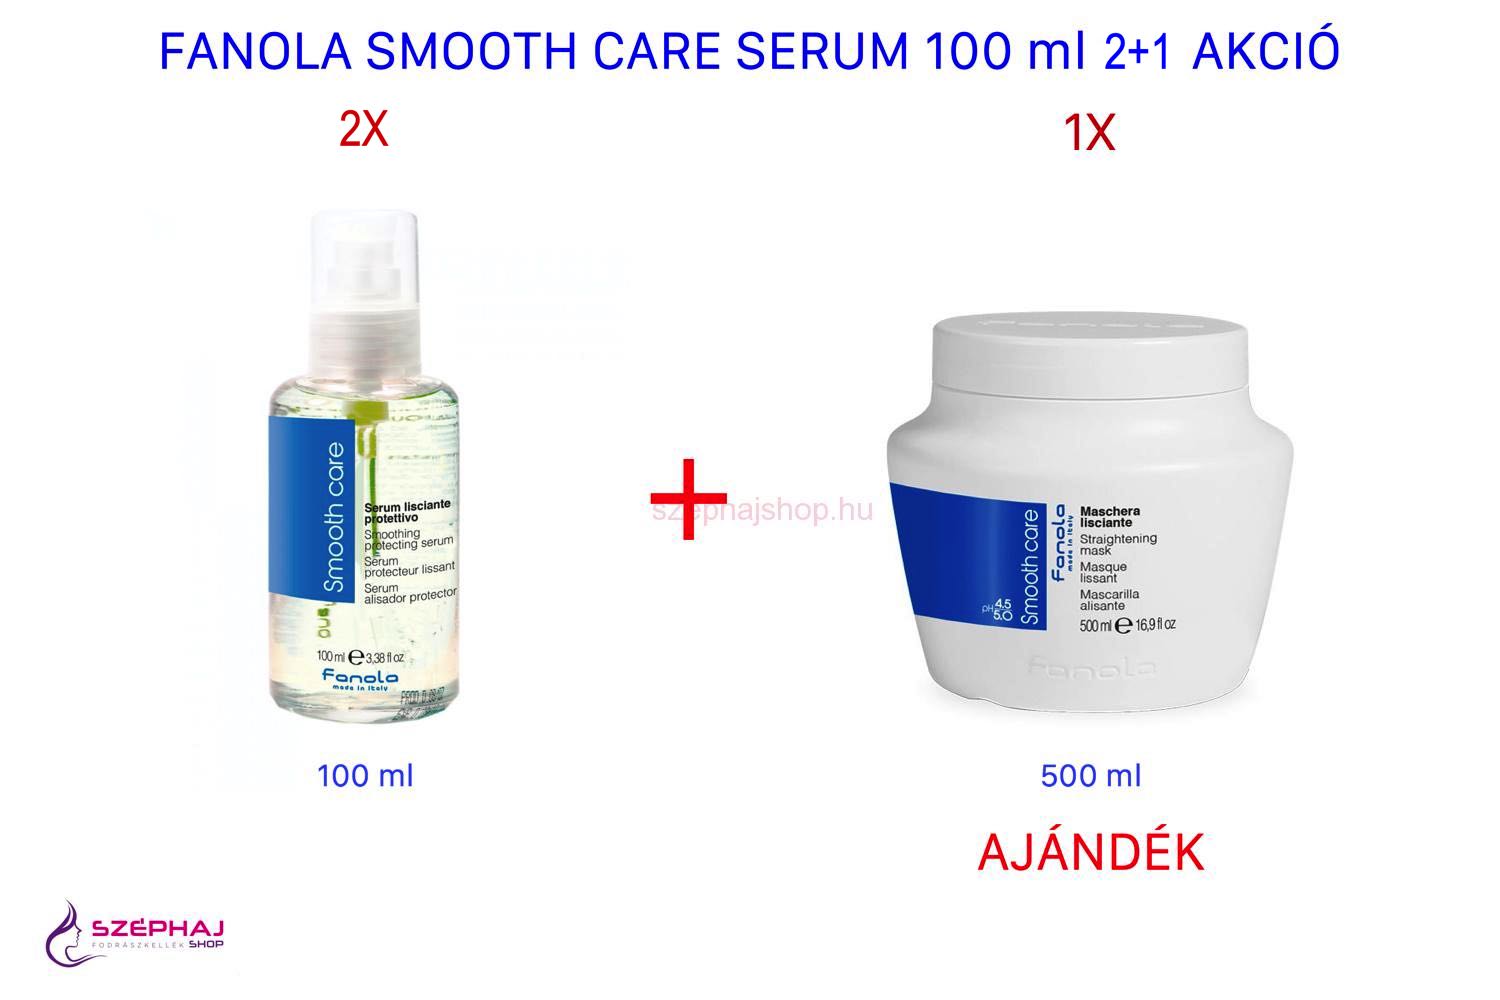 FANOLA Smooth Care Serum 100 ml 2+1 AKCIÓ